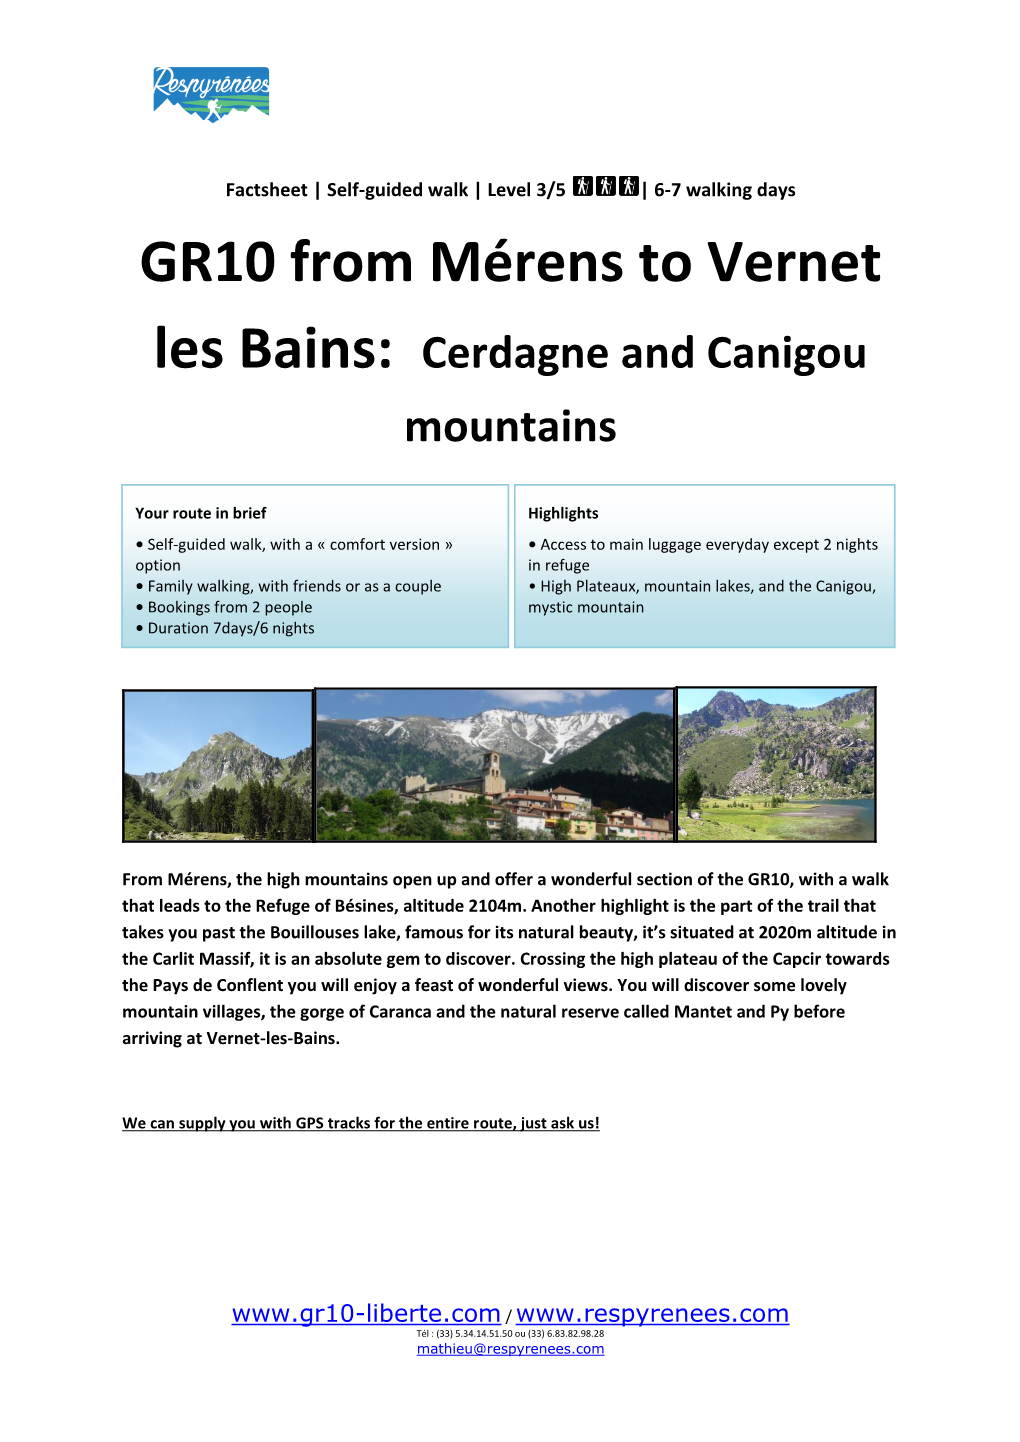 GR10 from Mérens to Vernet Les Bains: Cerdagne and Canigou Mountains